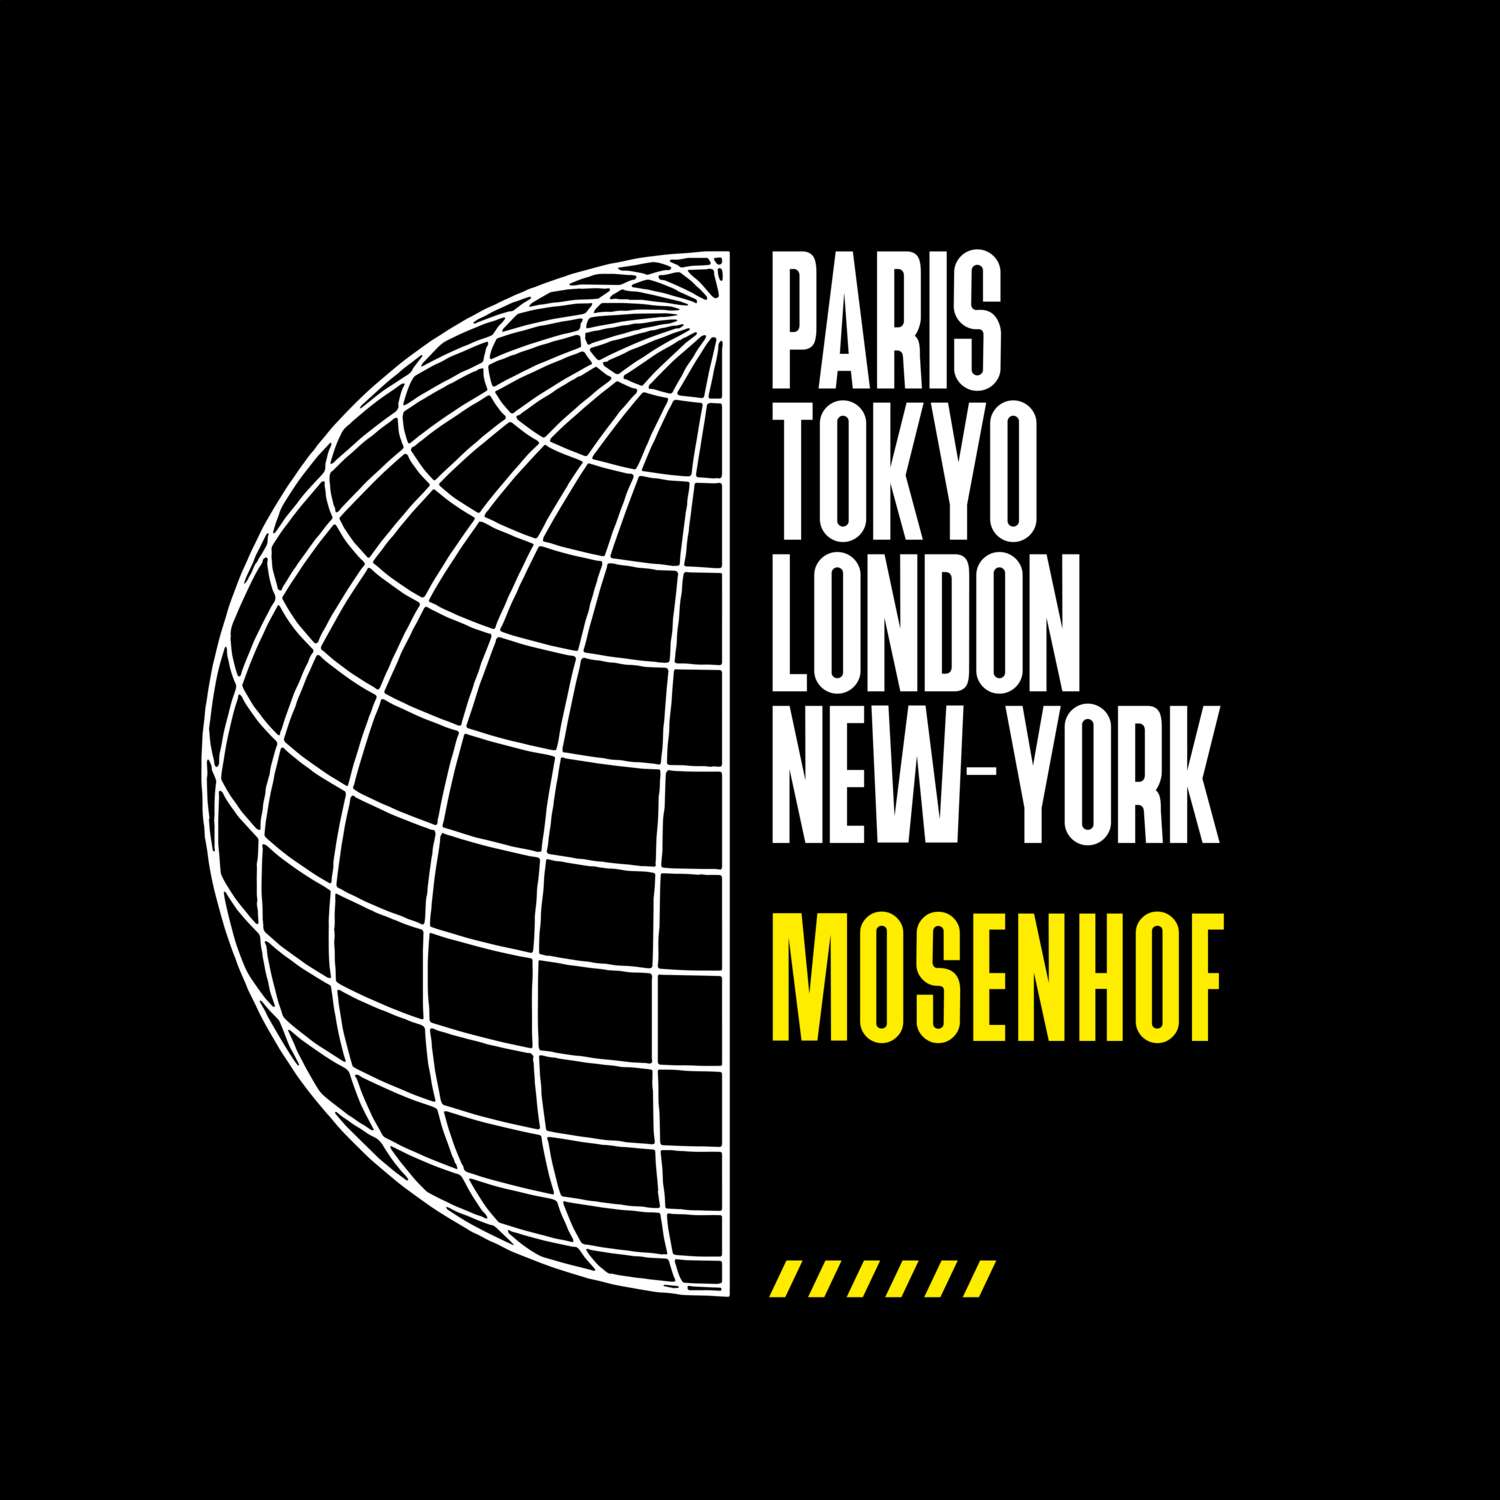 Mosenhof T-Shirt »Paris Tokyo London«